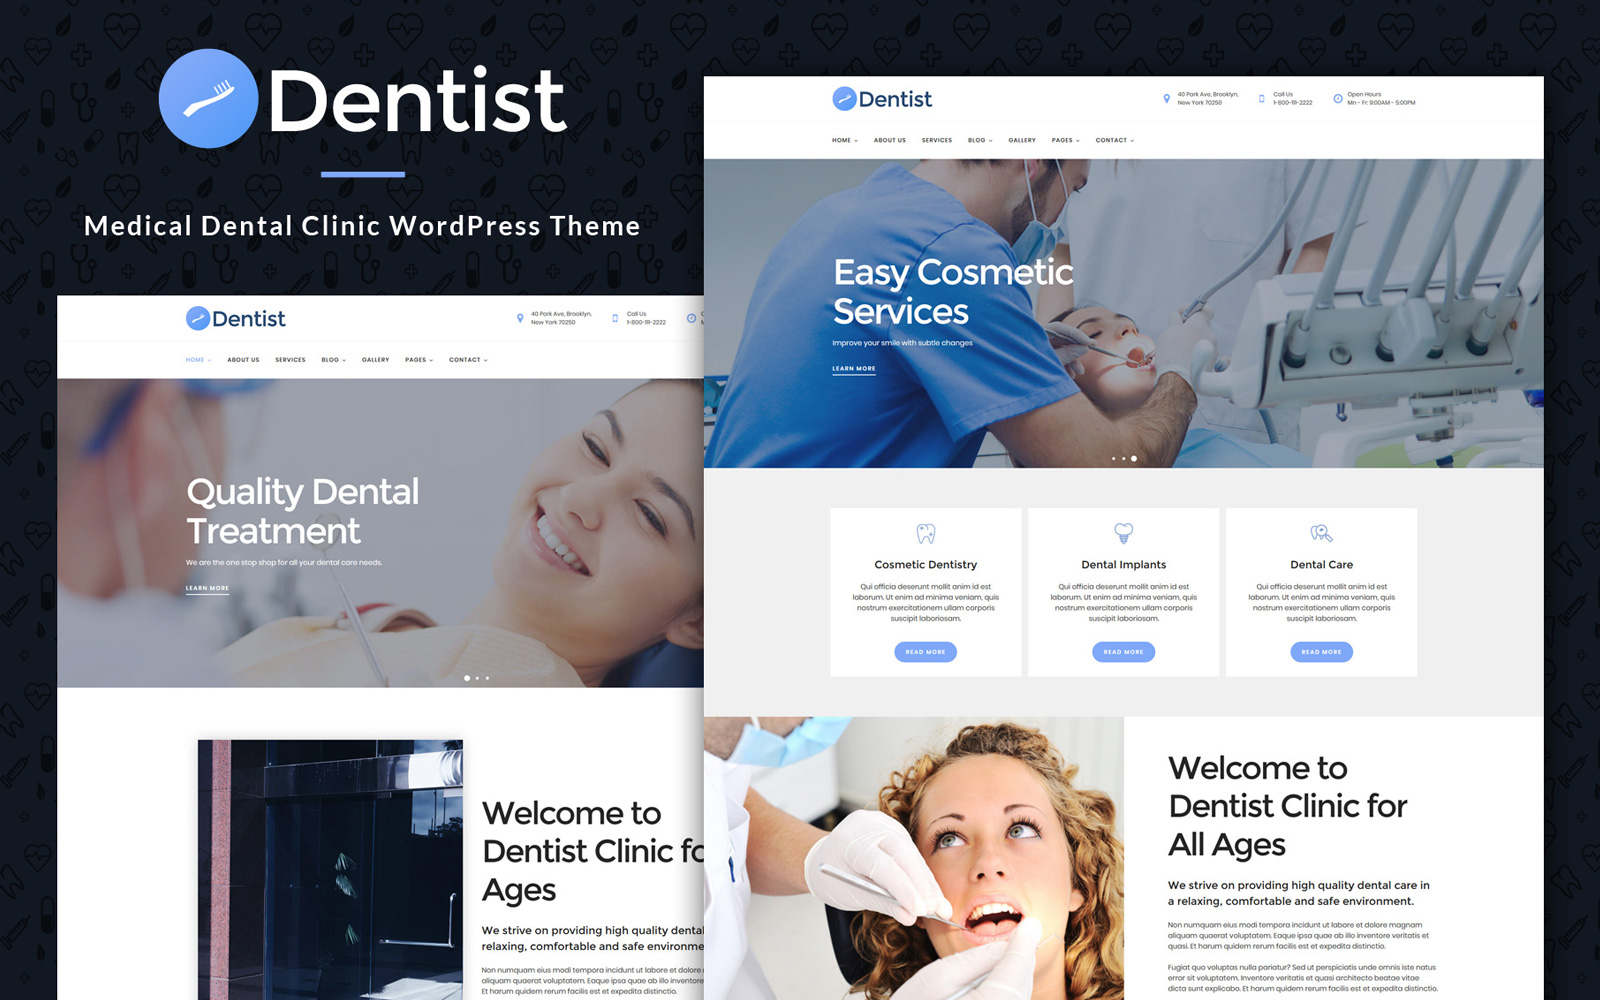 Шаблон Wordpress Dentist - Dental Medical Clinic Theme WordPress